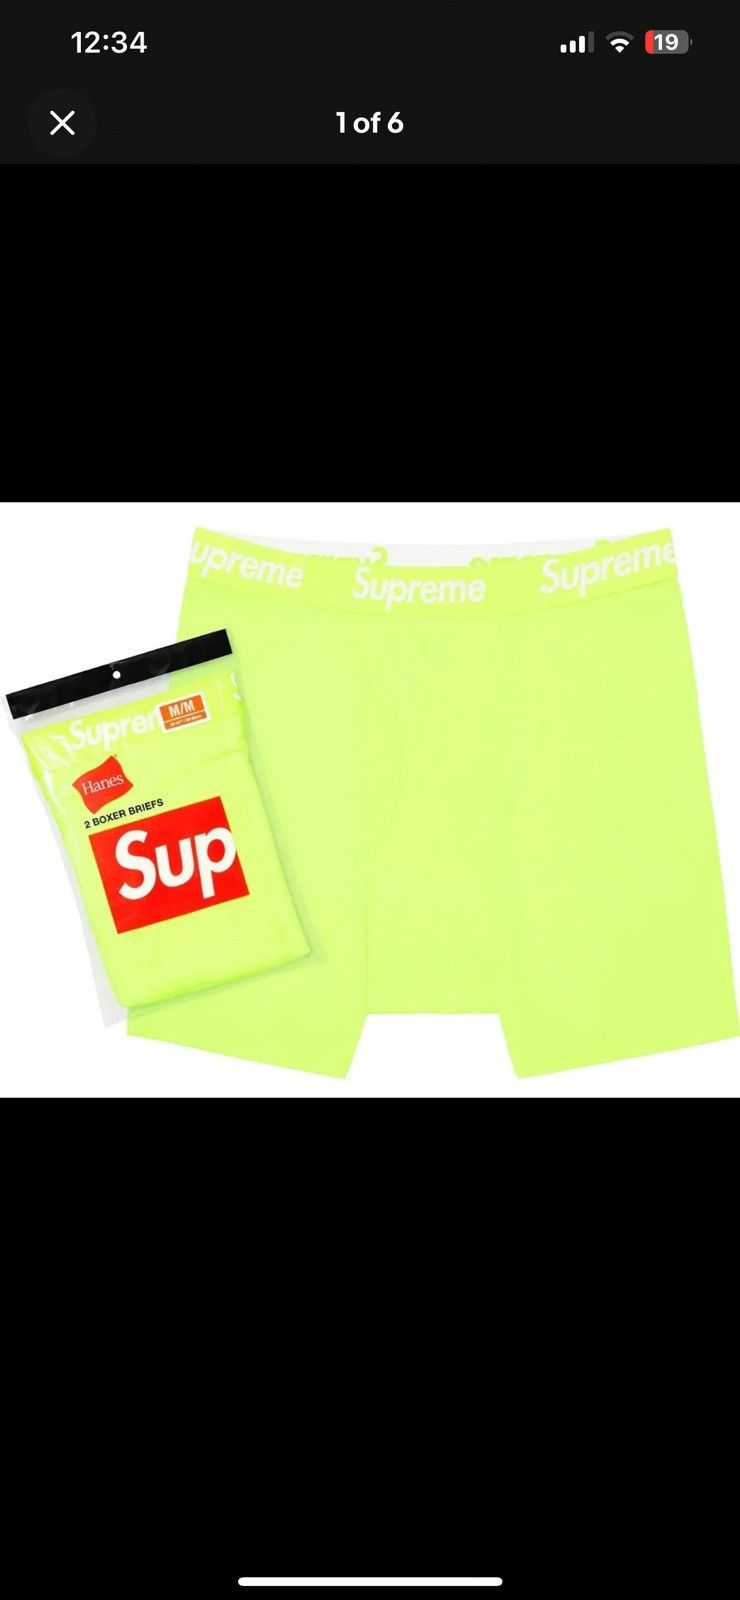 Supreme Hanes Boxer Briefs (2 Pack) Flourescent Yellow